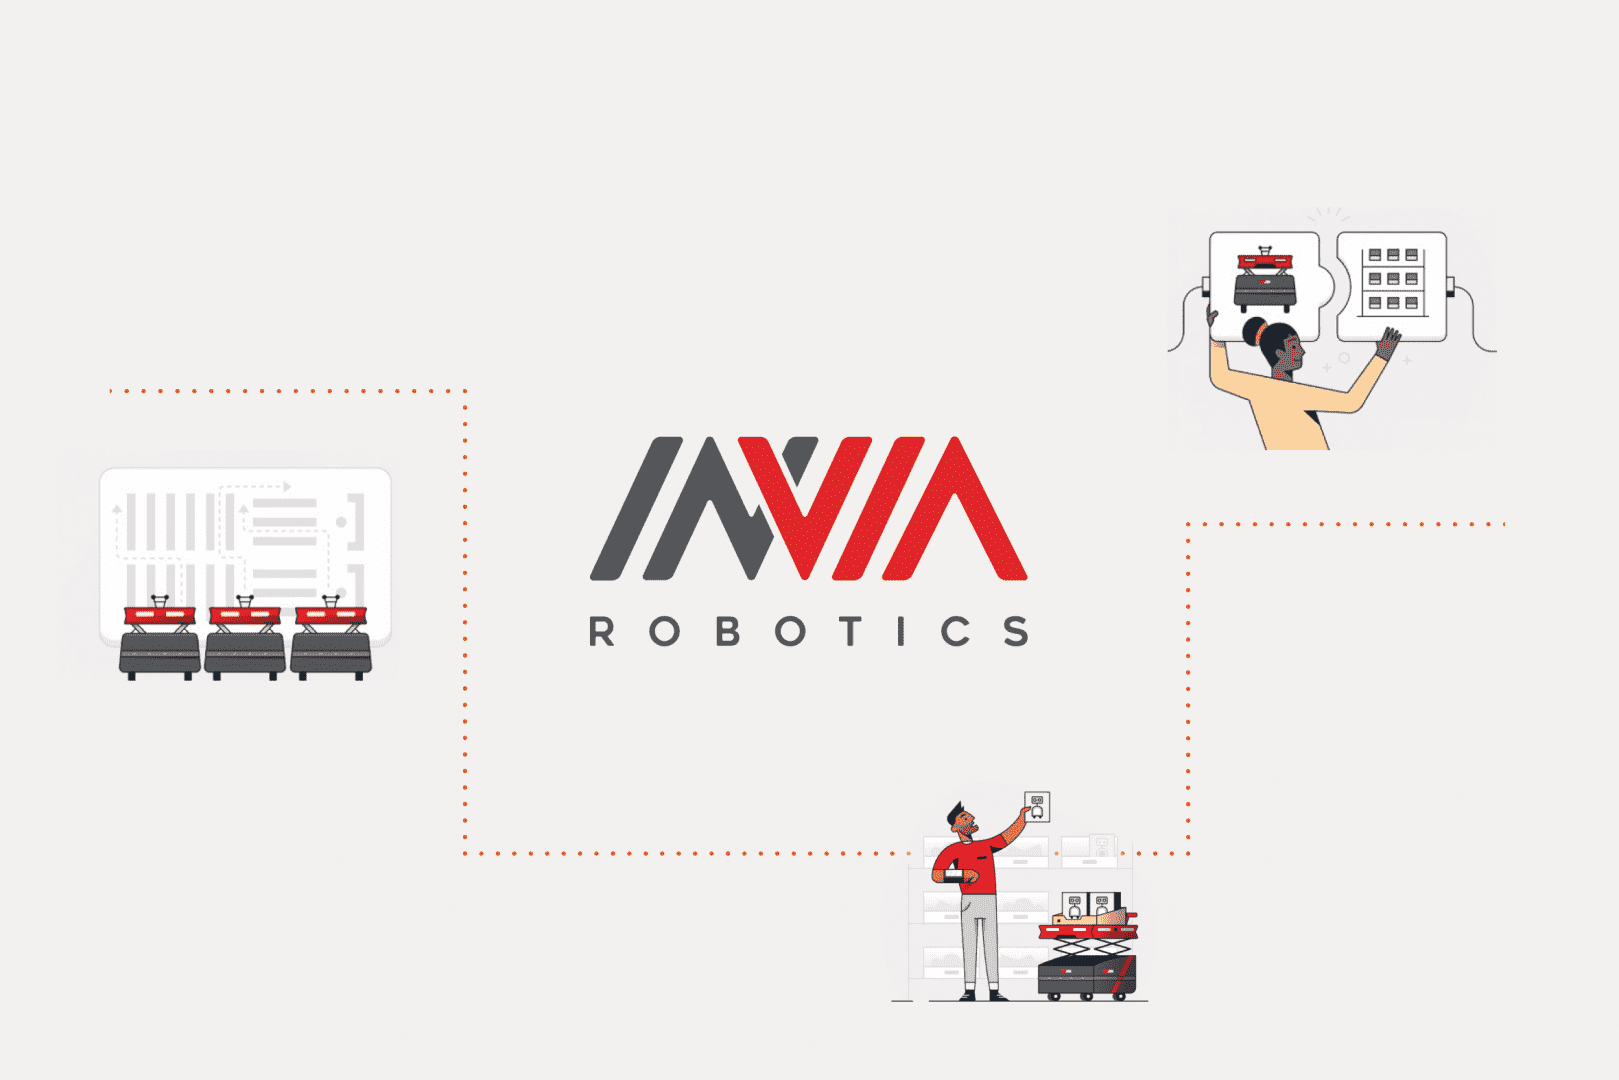 inVia Robotics logo and illustrations of workers using robots